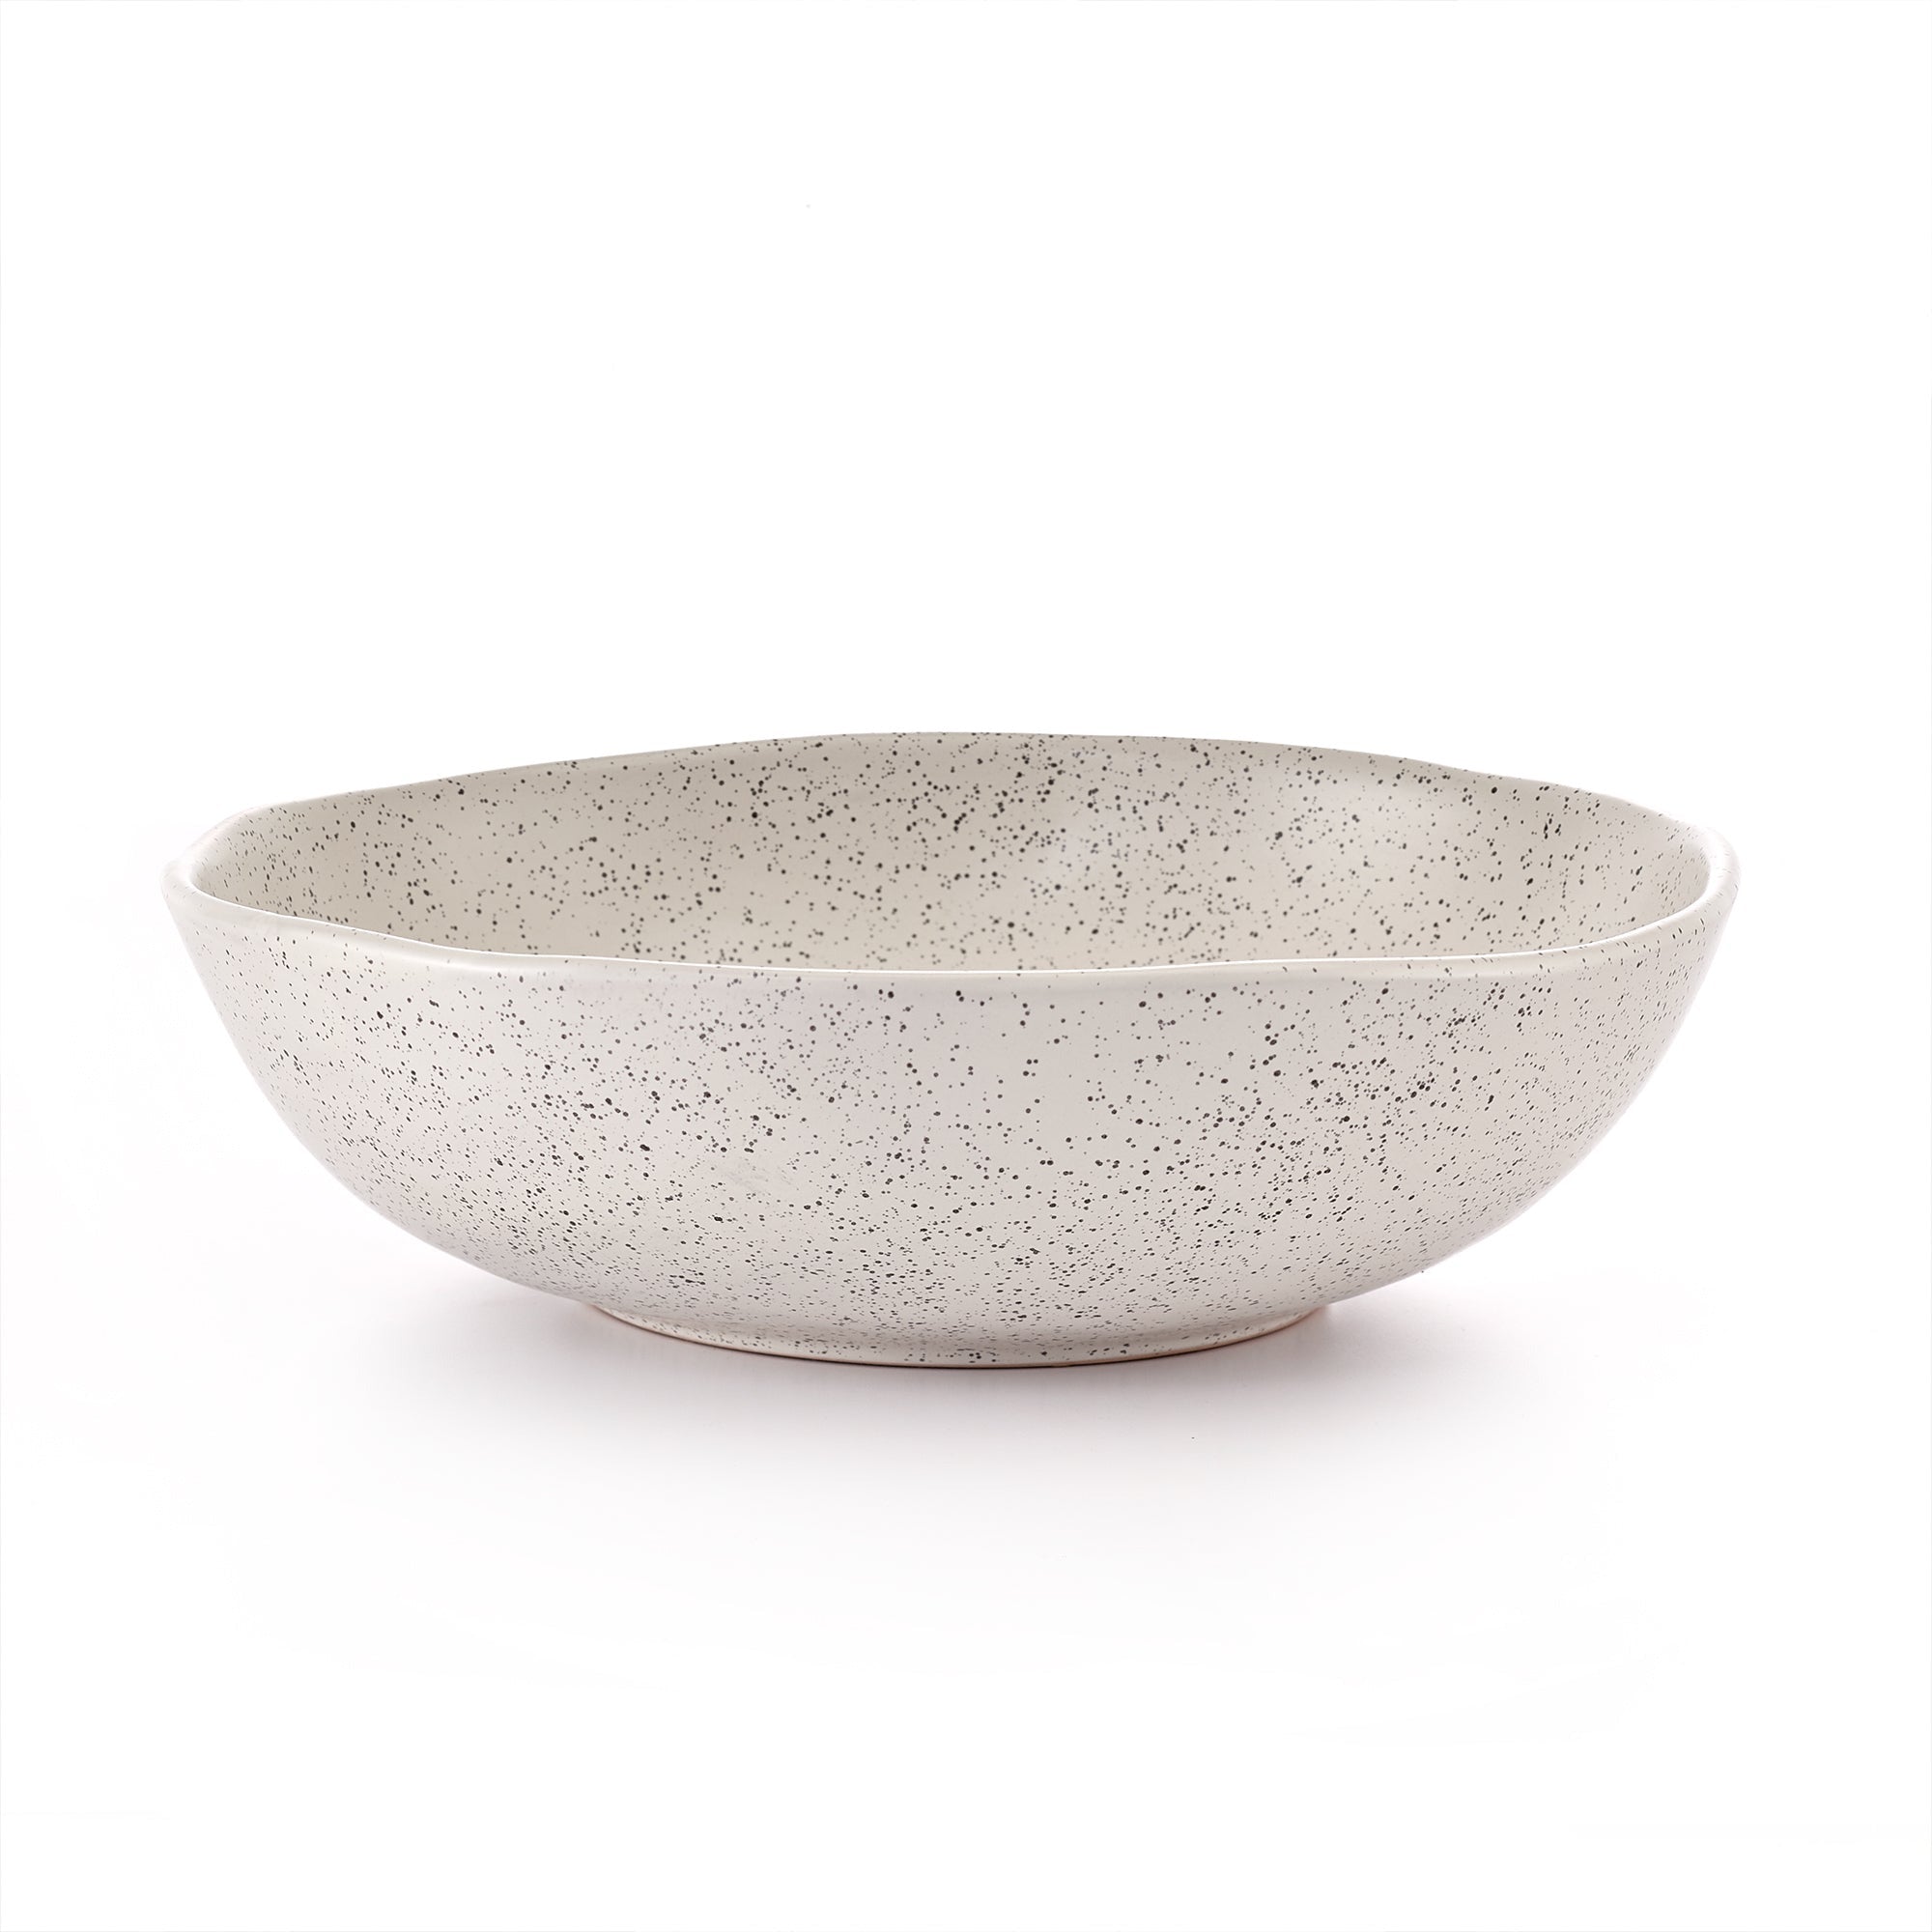 Moonlight glass bowl | 28cm